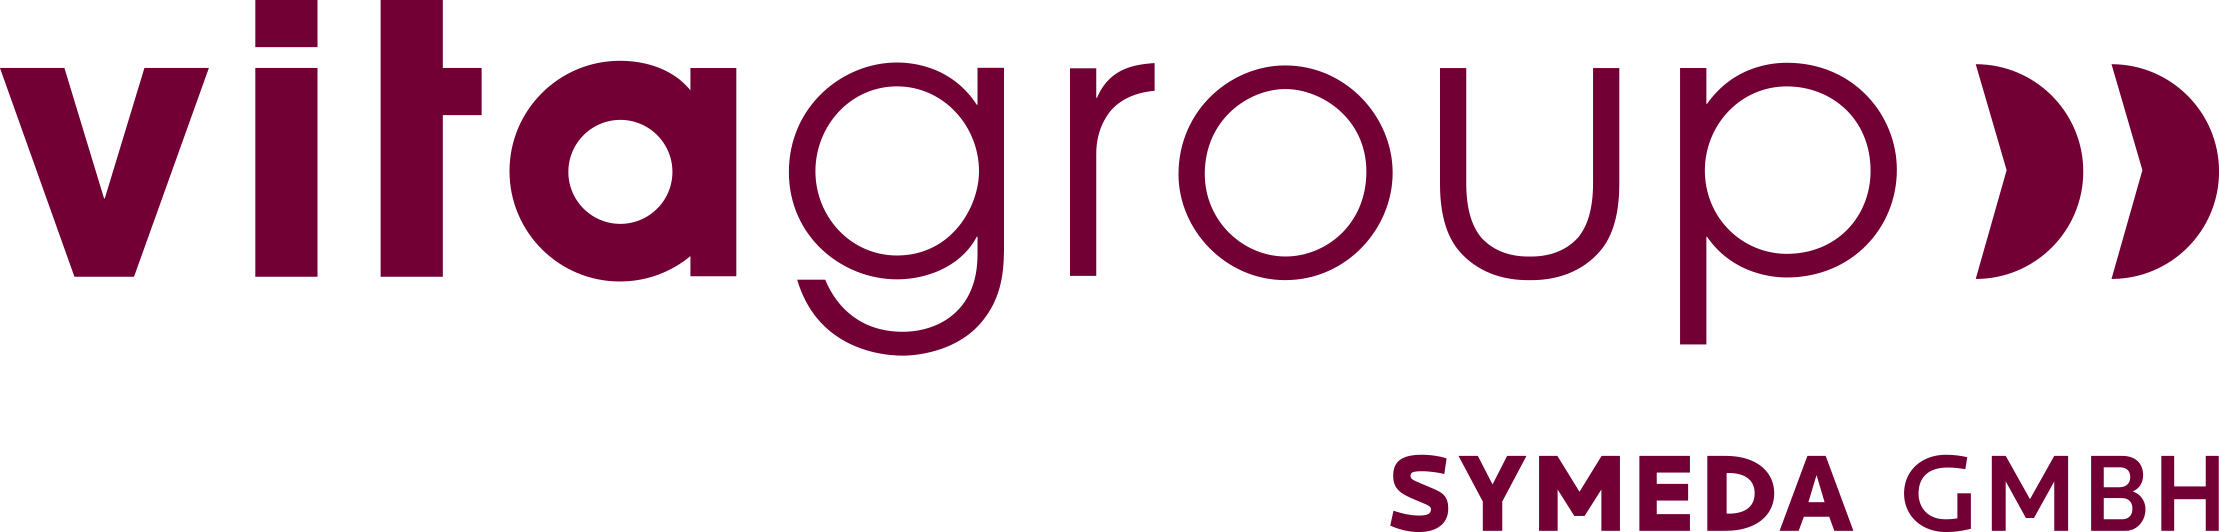 vitagrpup logo